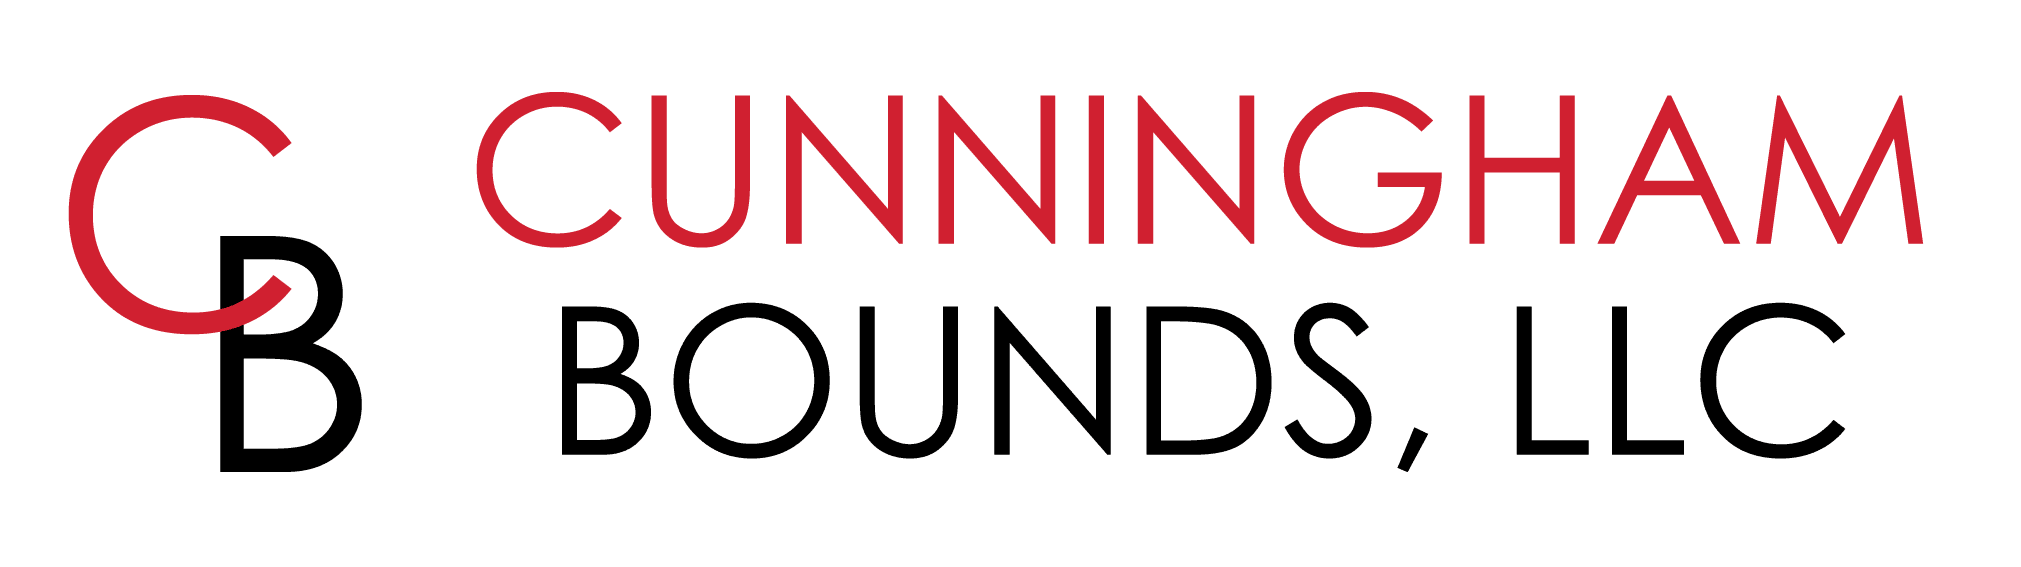 Cunningham Bounds